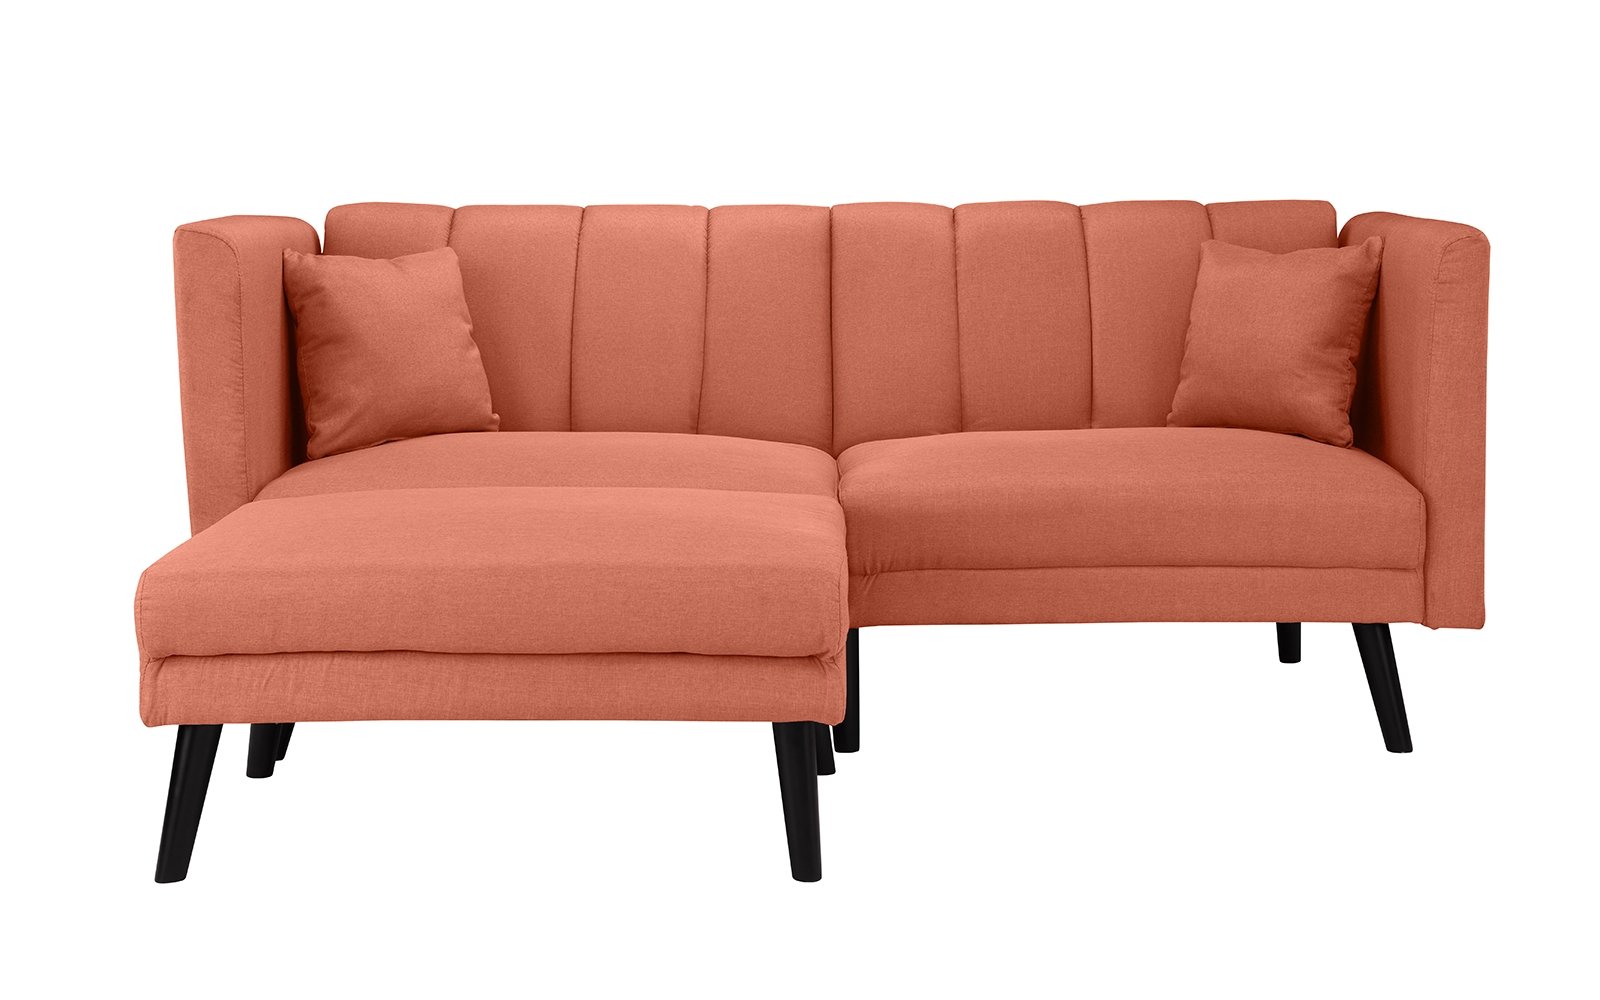 mid century modern futon sofa bed with footstool